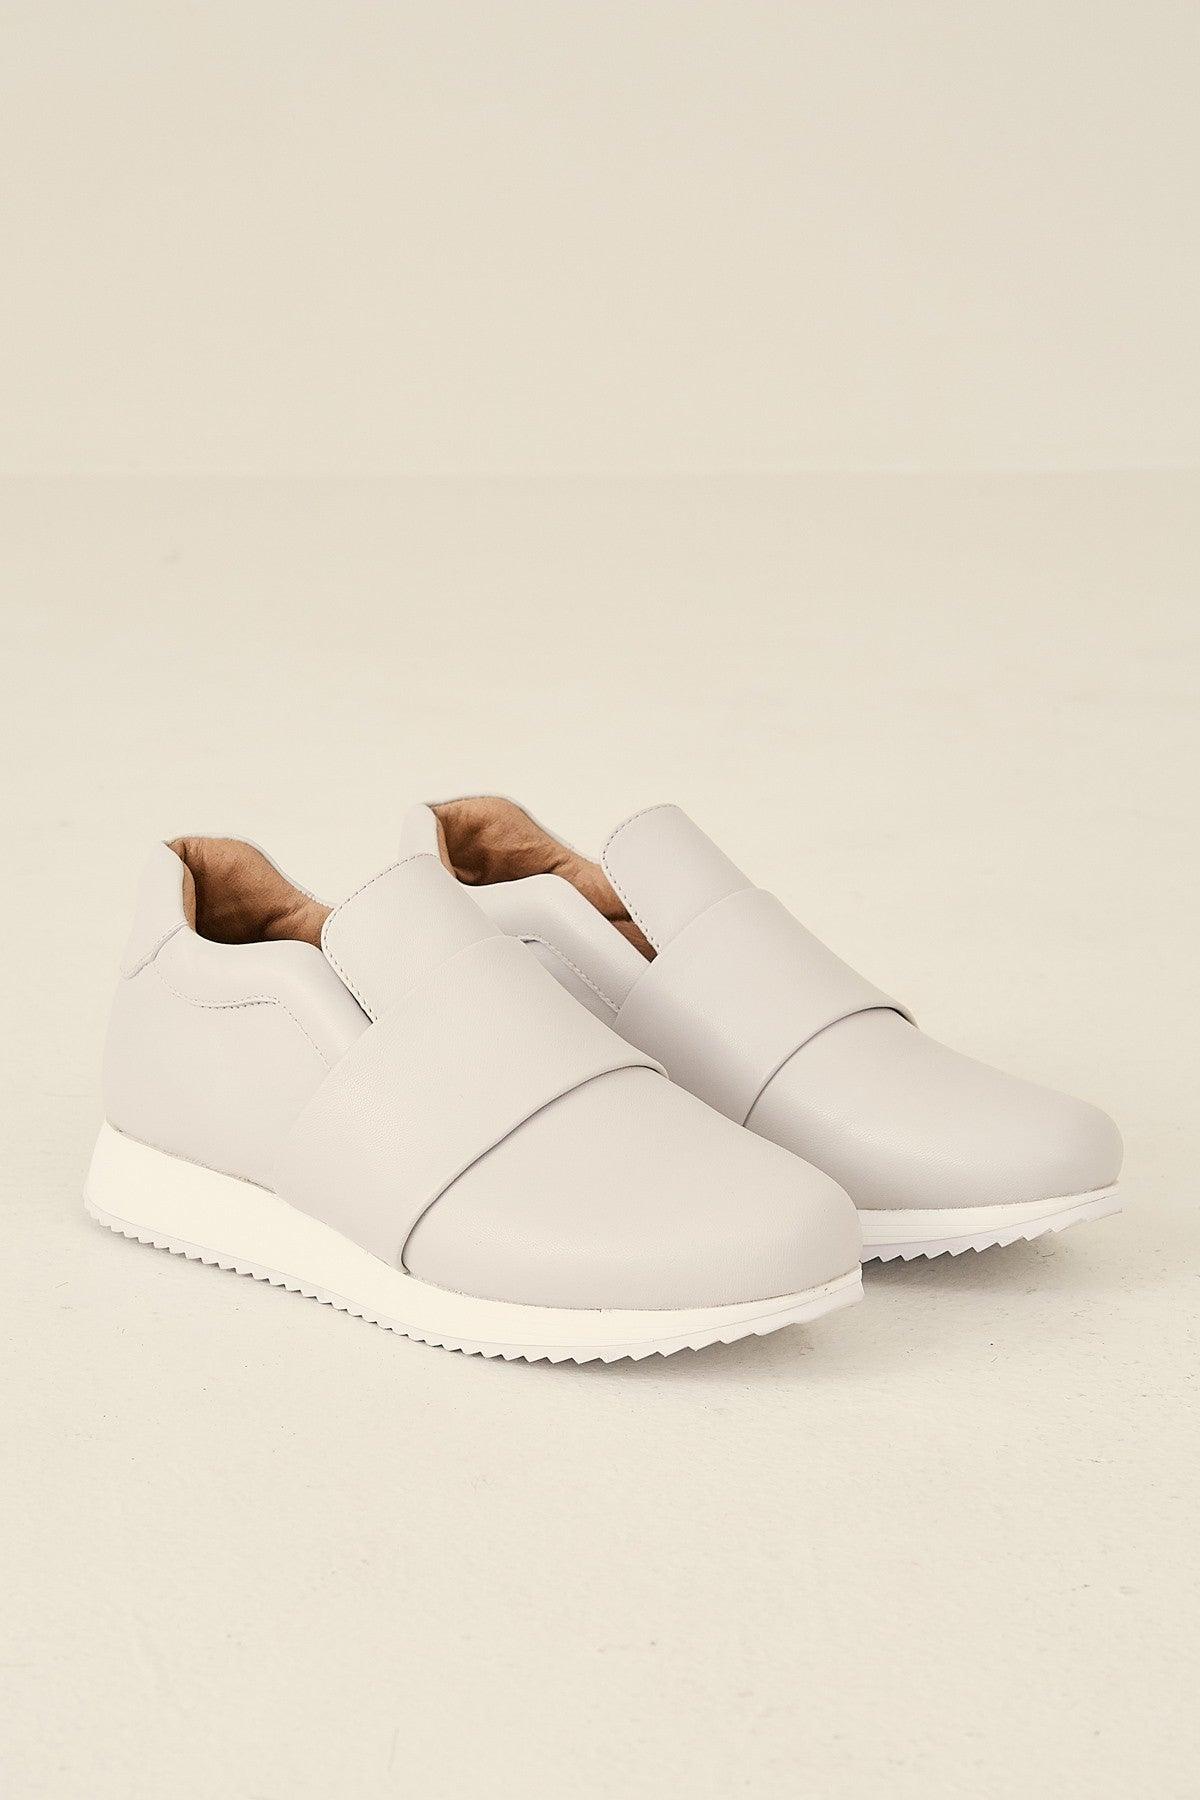 Bandeau Sneaker Grey - Uncommon